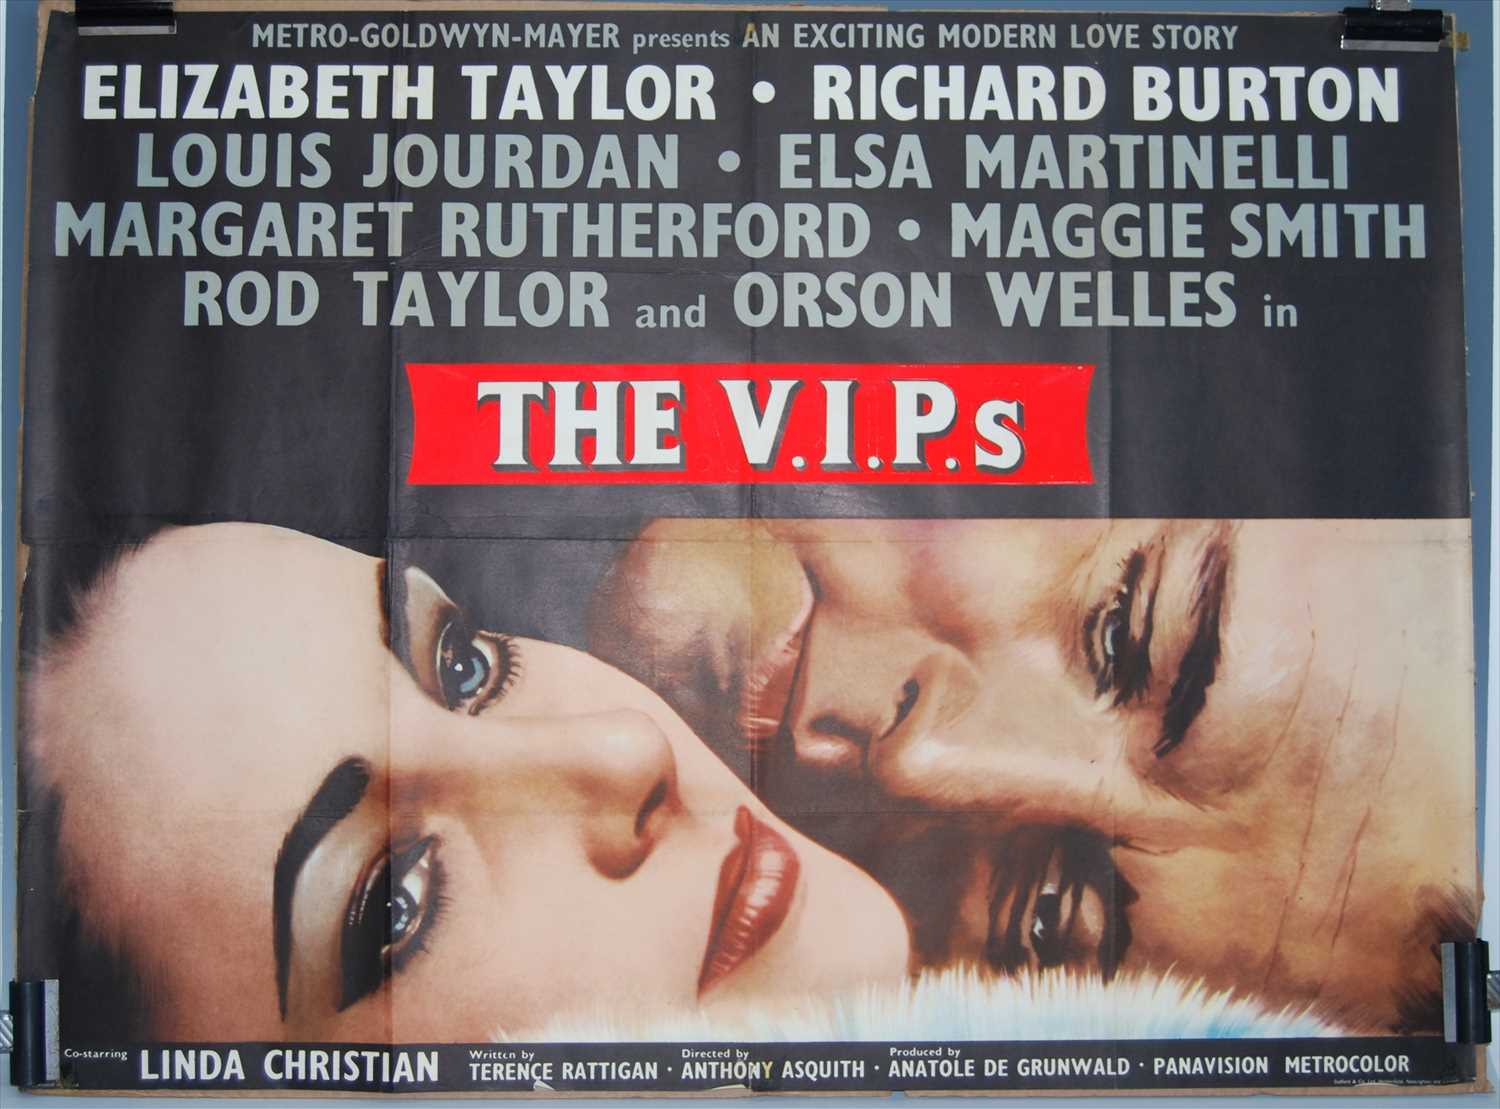 Lot 533 - The V.I.P.s. (Hotel International), 9163 UK quad poster